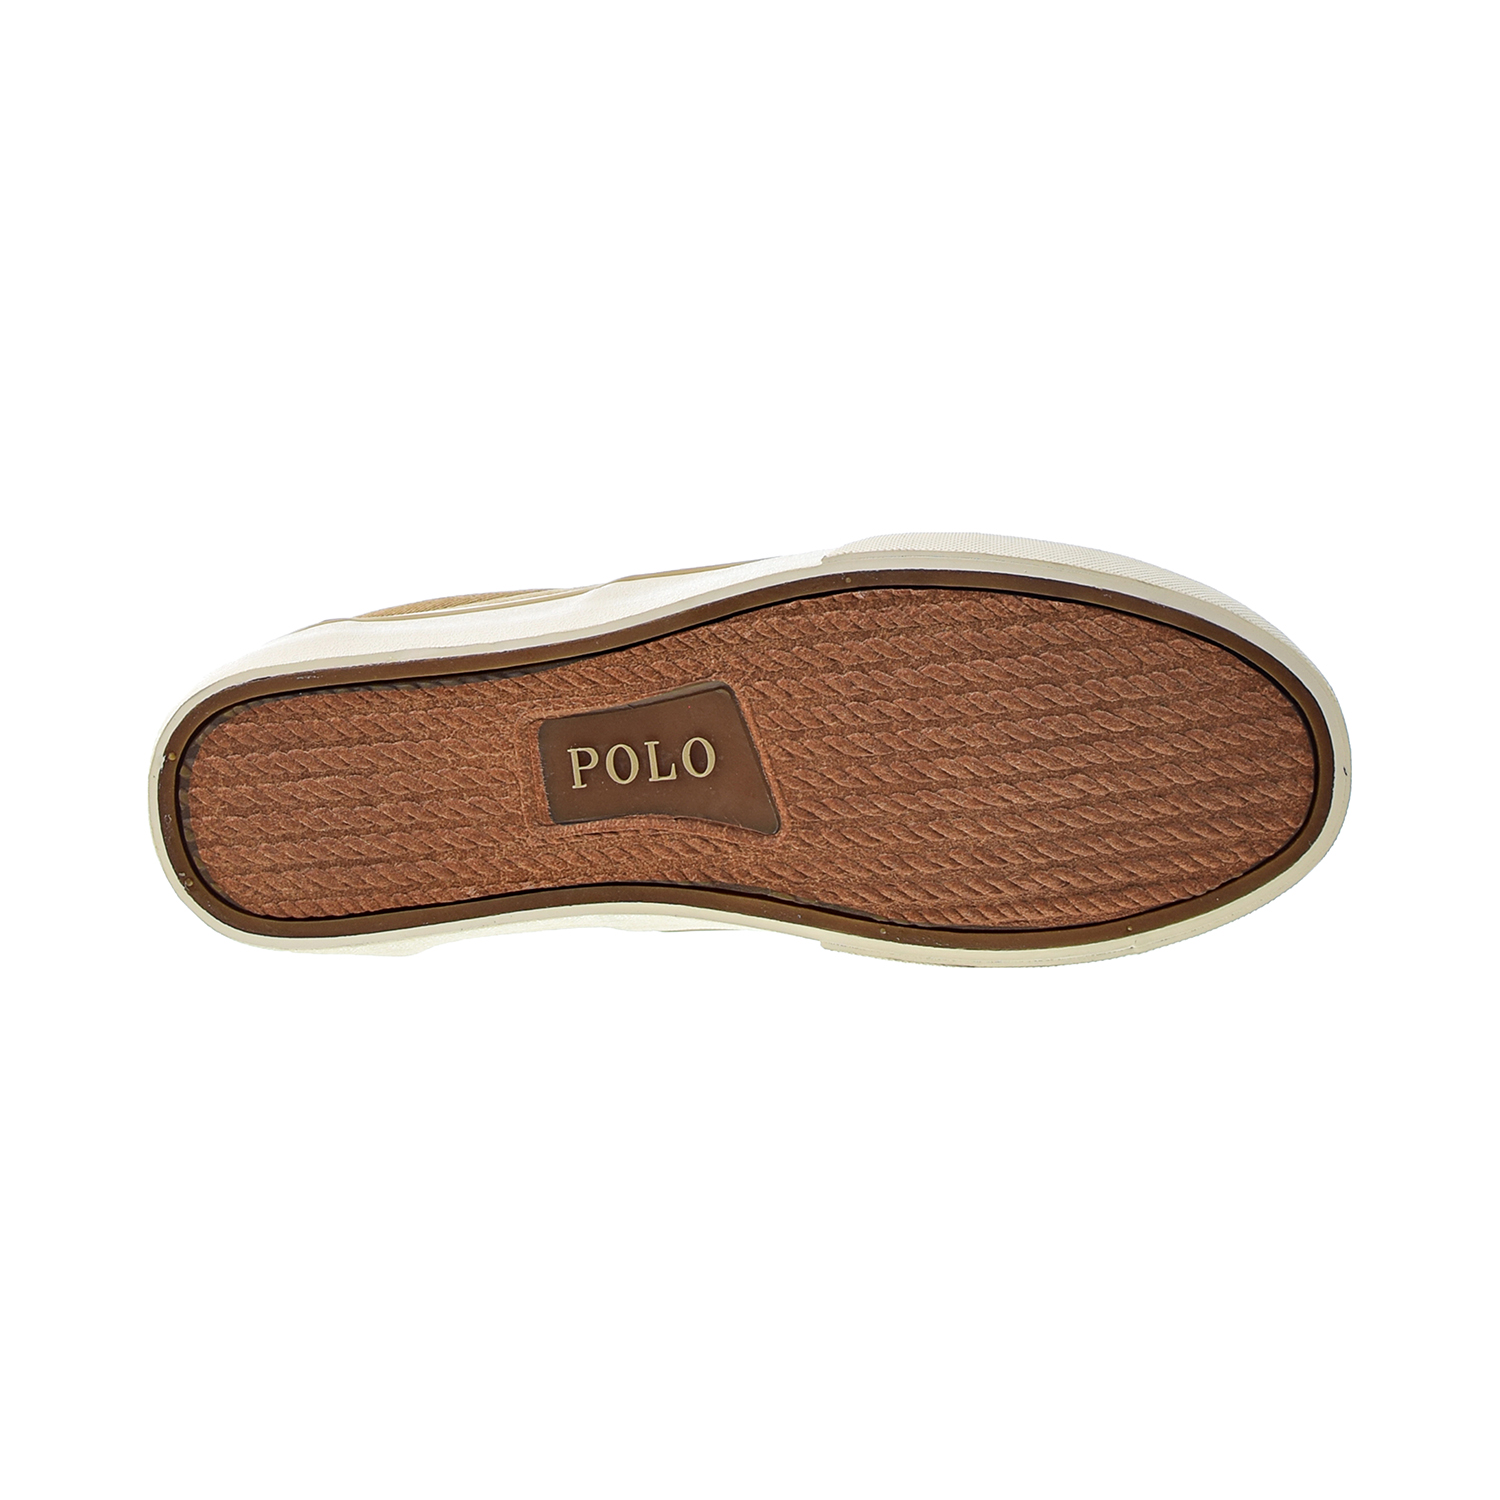 Polo Ralph Lauren Thorton Men's Shoes Khaki 816729968-008 (8 M US)